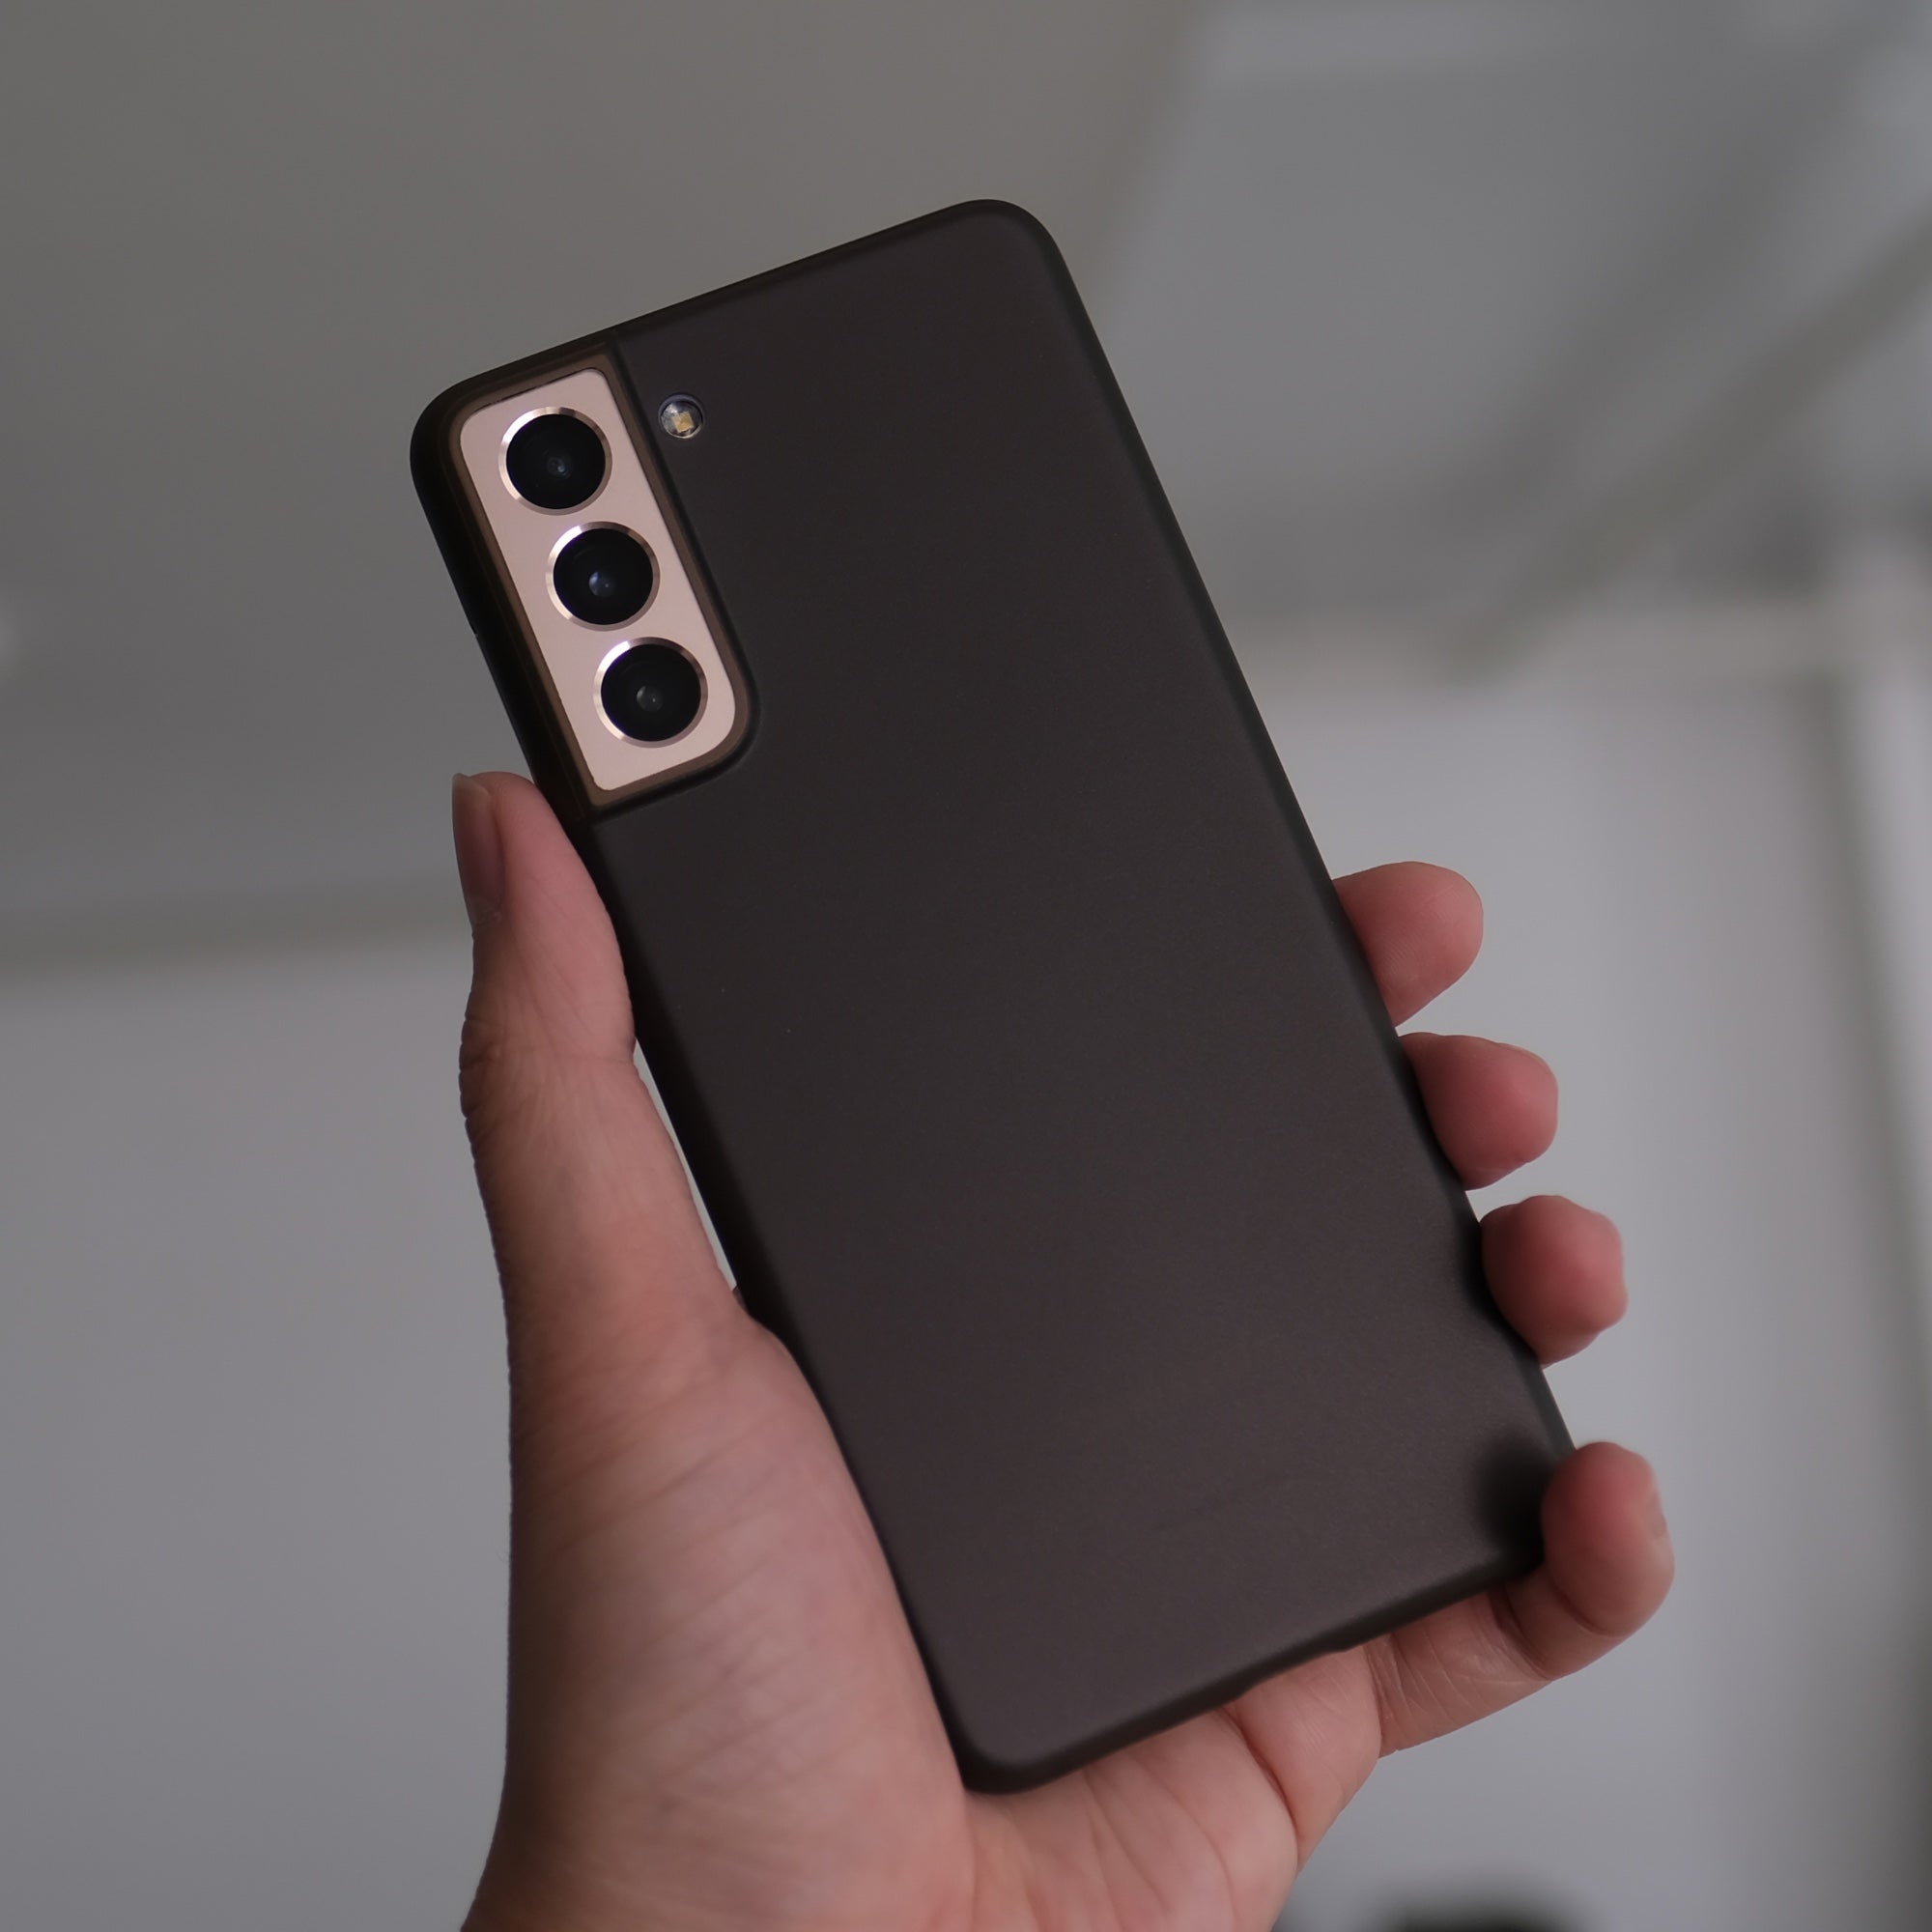 Thin black Samsung S21 Ultra case